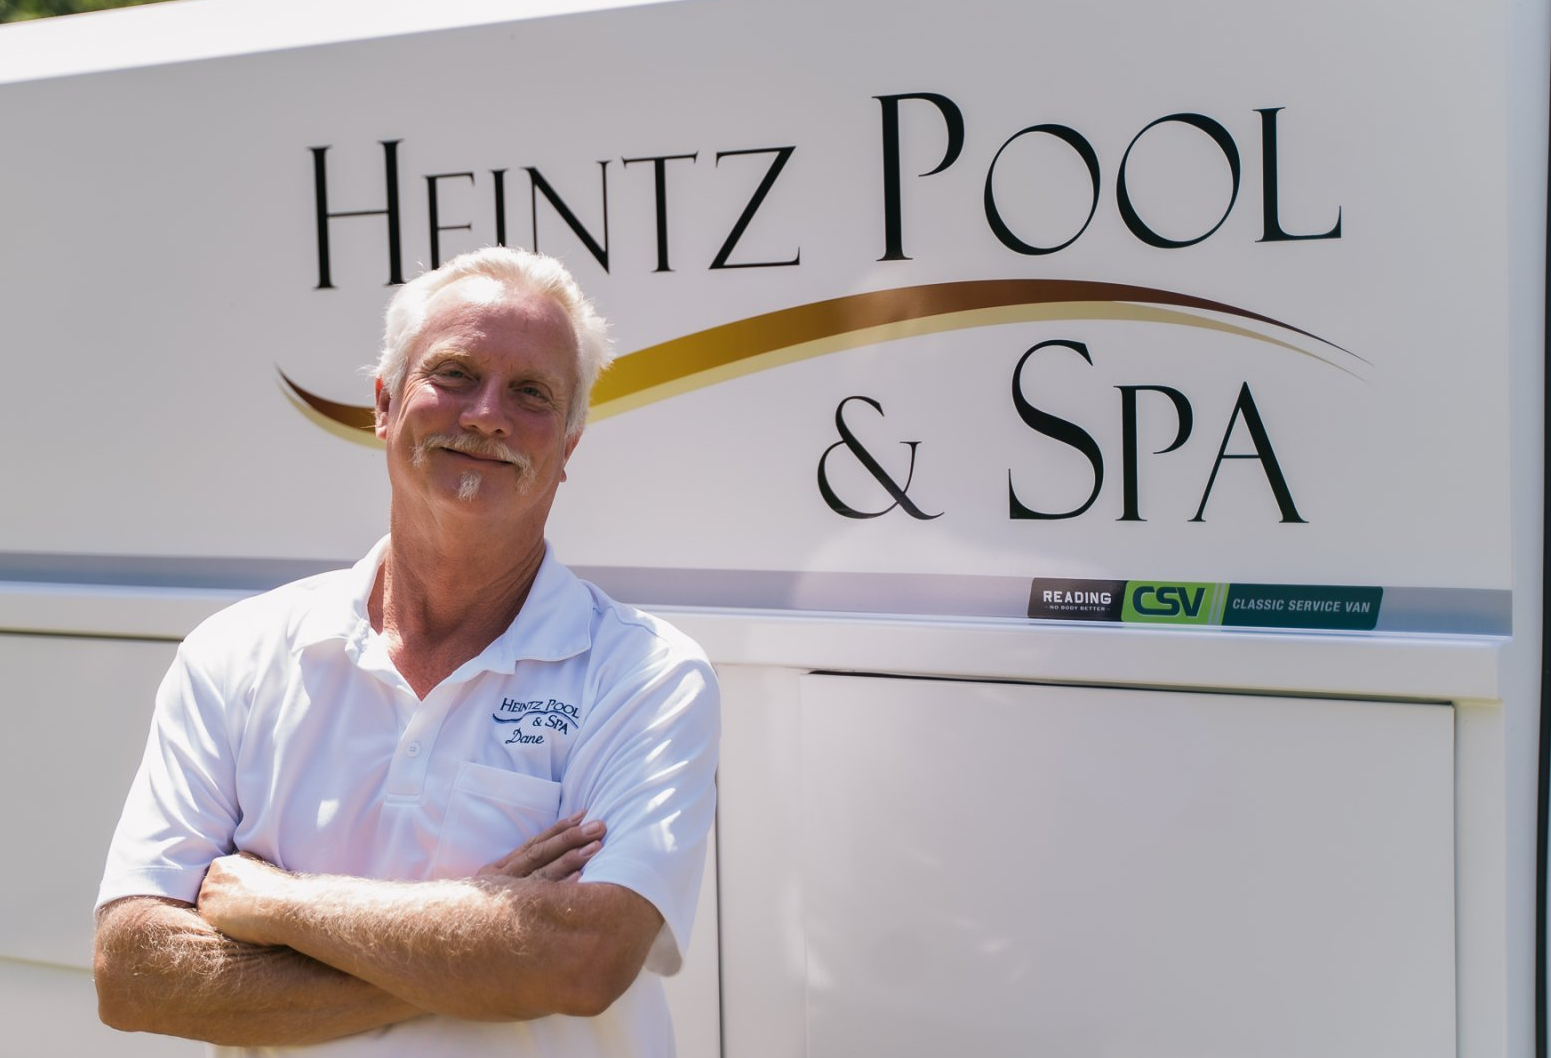 Heintz Pool & Spa member in white uniform standing beside the company truck